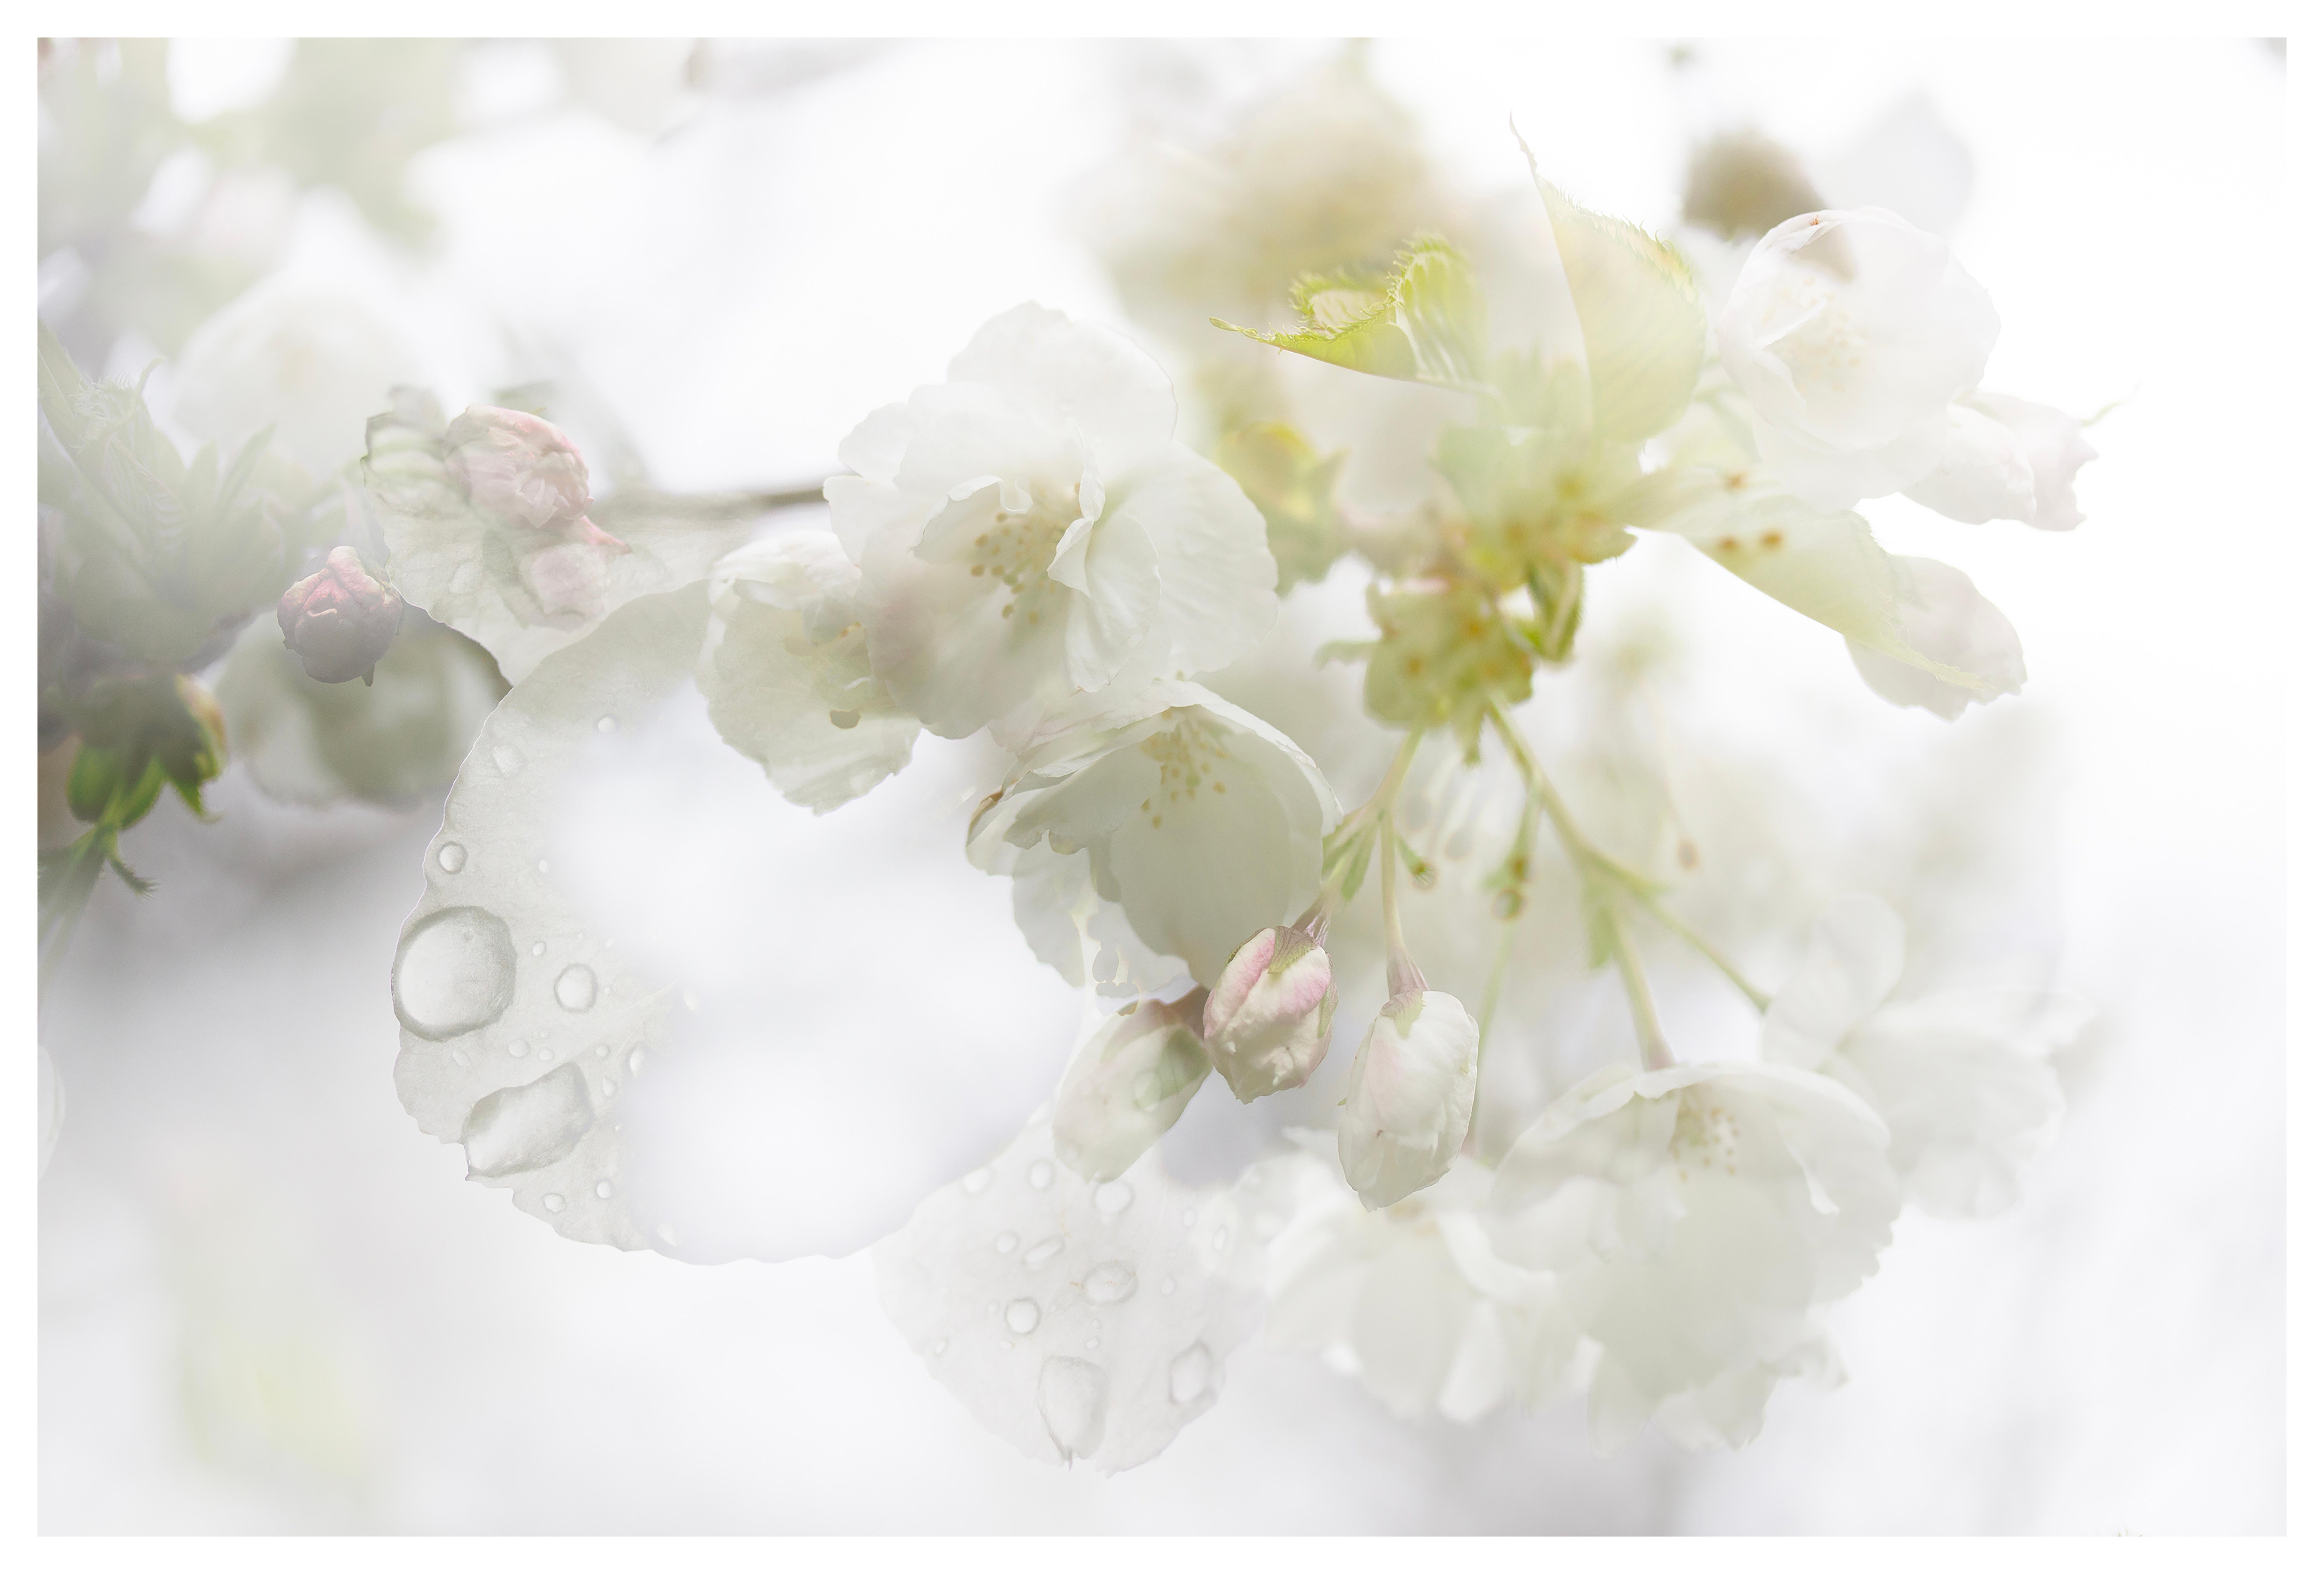 Sophia Milligan Abstract Photograph – Spring Rain' Foto Kirschblüte Sakura Blumen grün weiß Nature